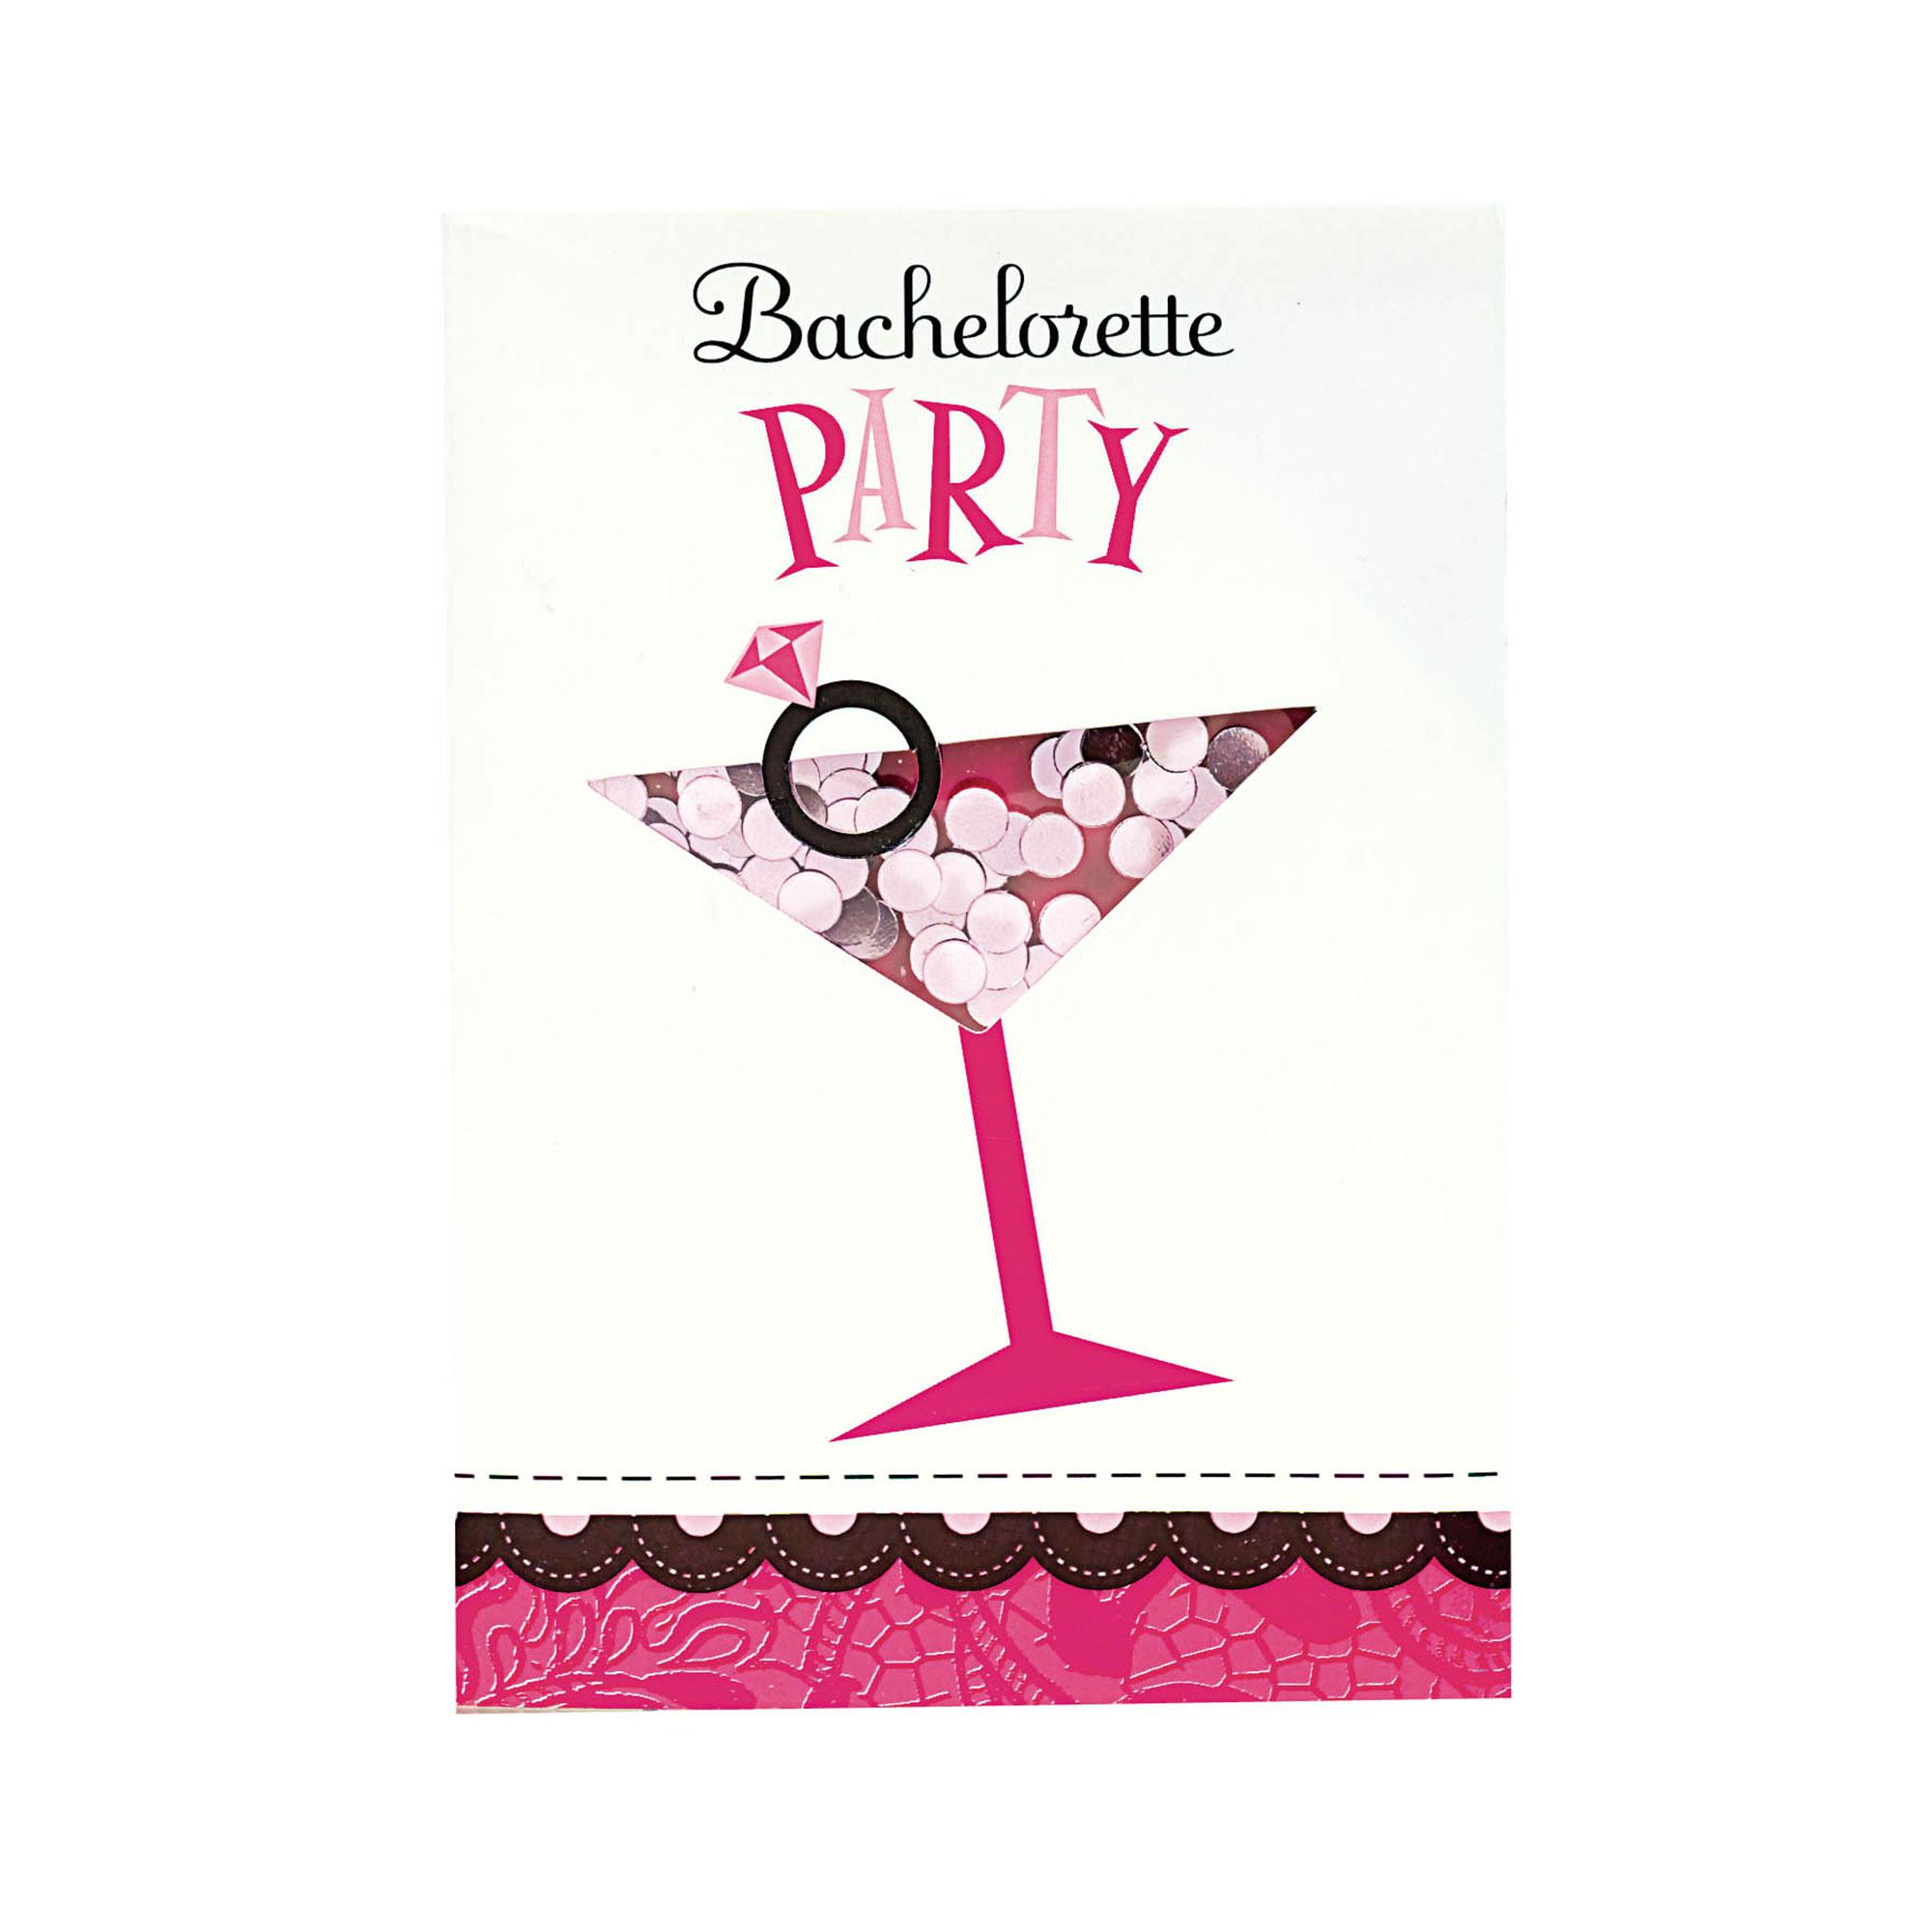 Bachelorette Party Shaker Invitation Cards 8pcs Party Accessories - Party Centre